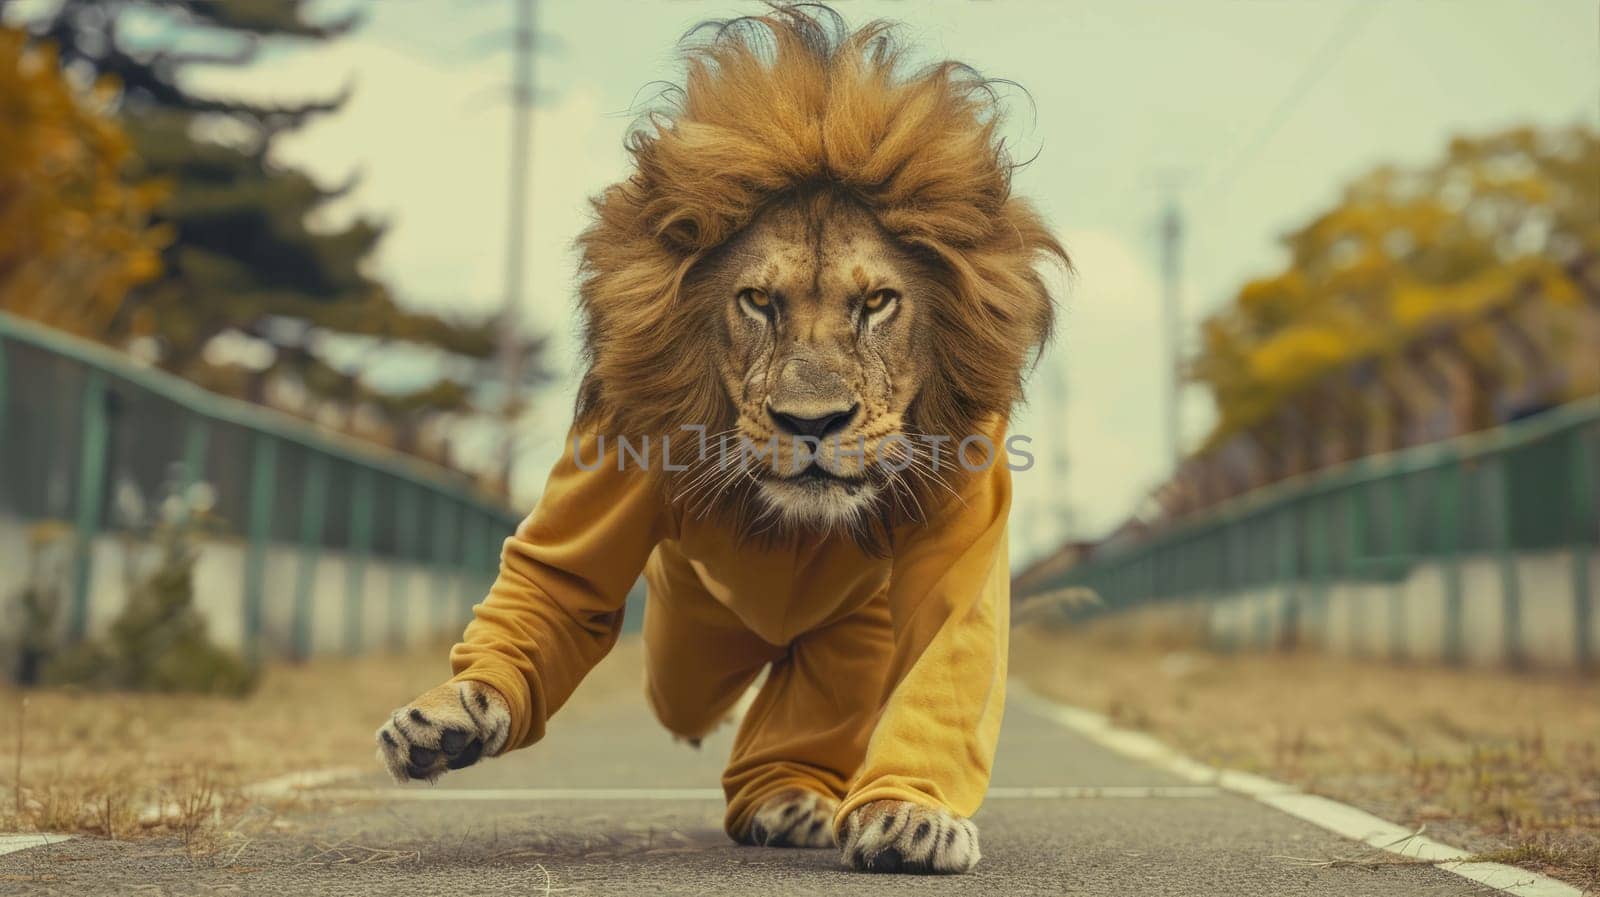 A lion in a yellow prisoner suit escapes from prison along an asphalt road AI